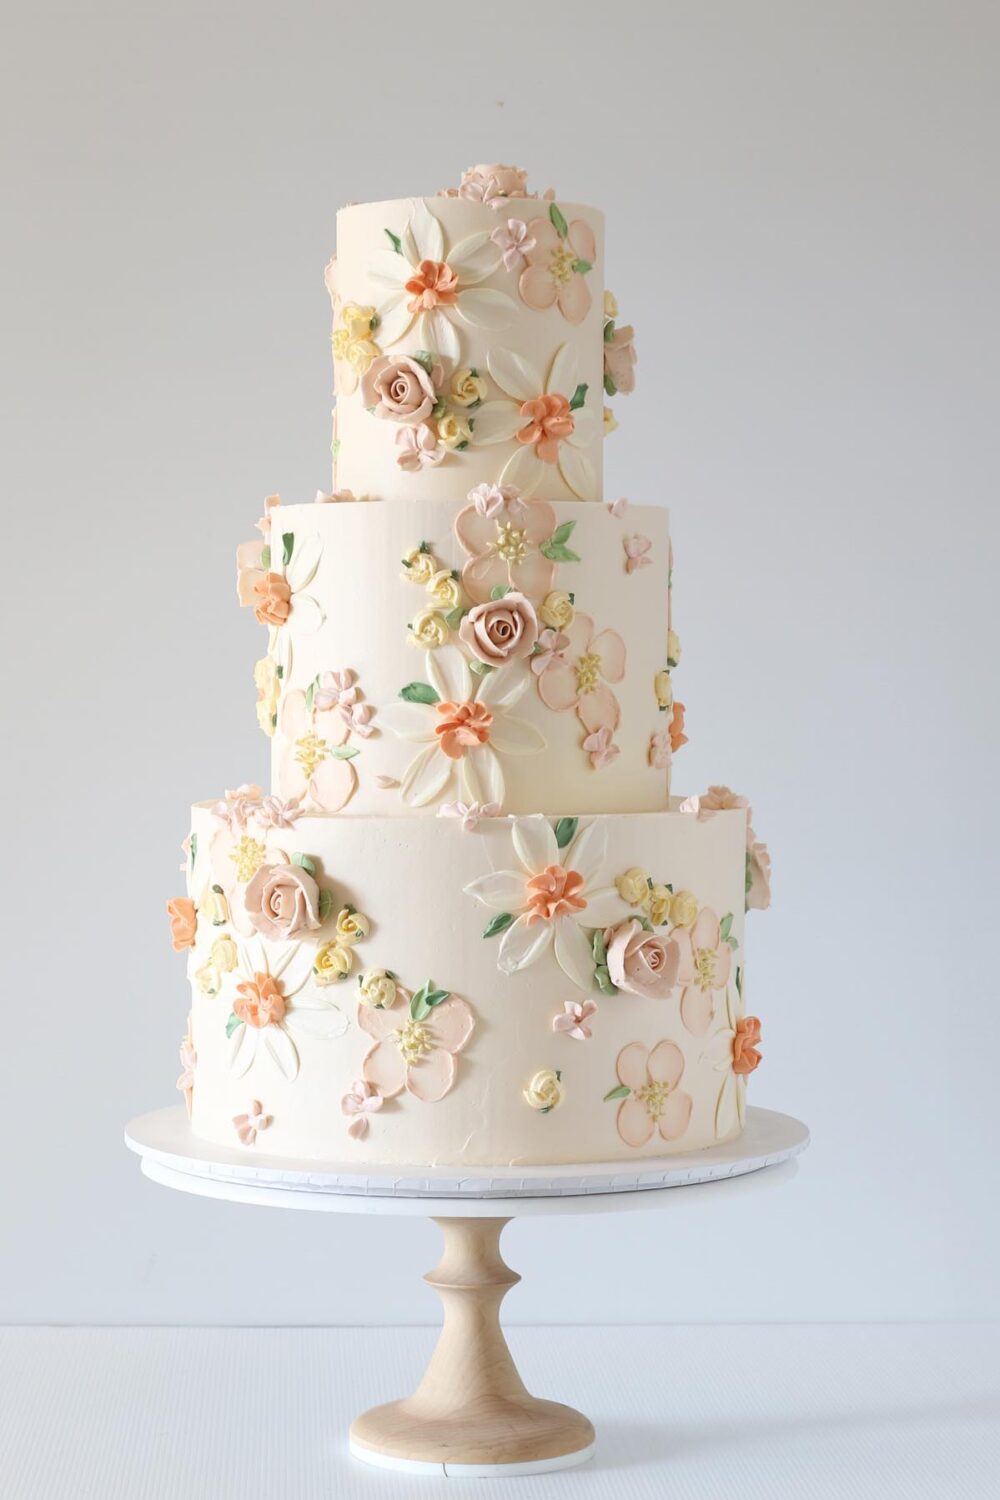 zoe clark cakes sunshine coast weddings to the aisle australia wedding directory